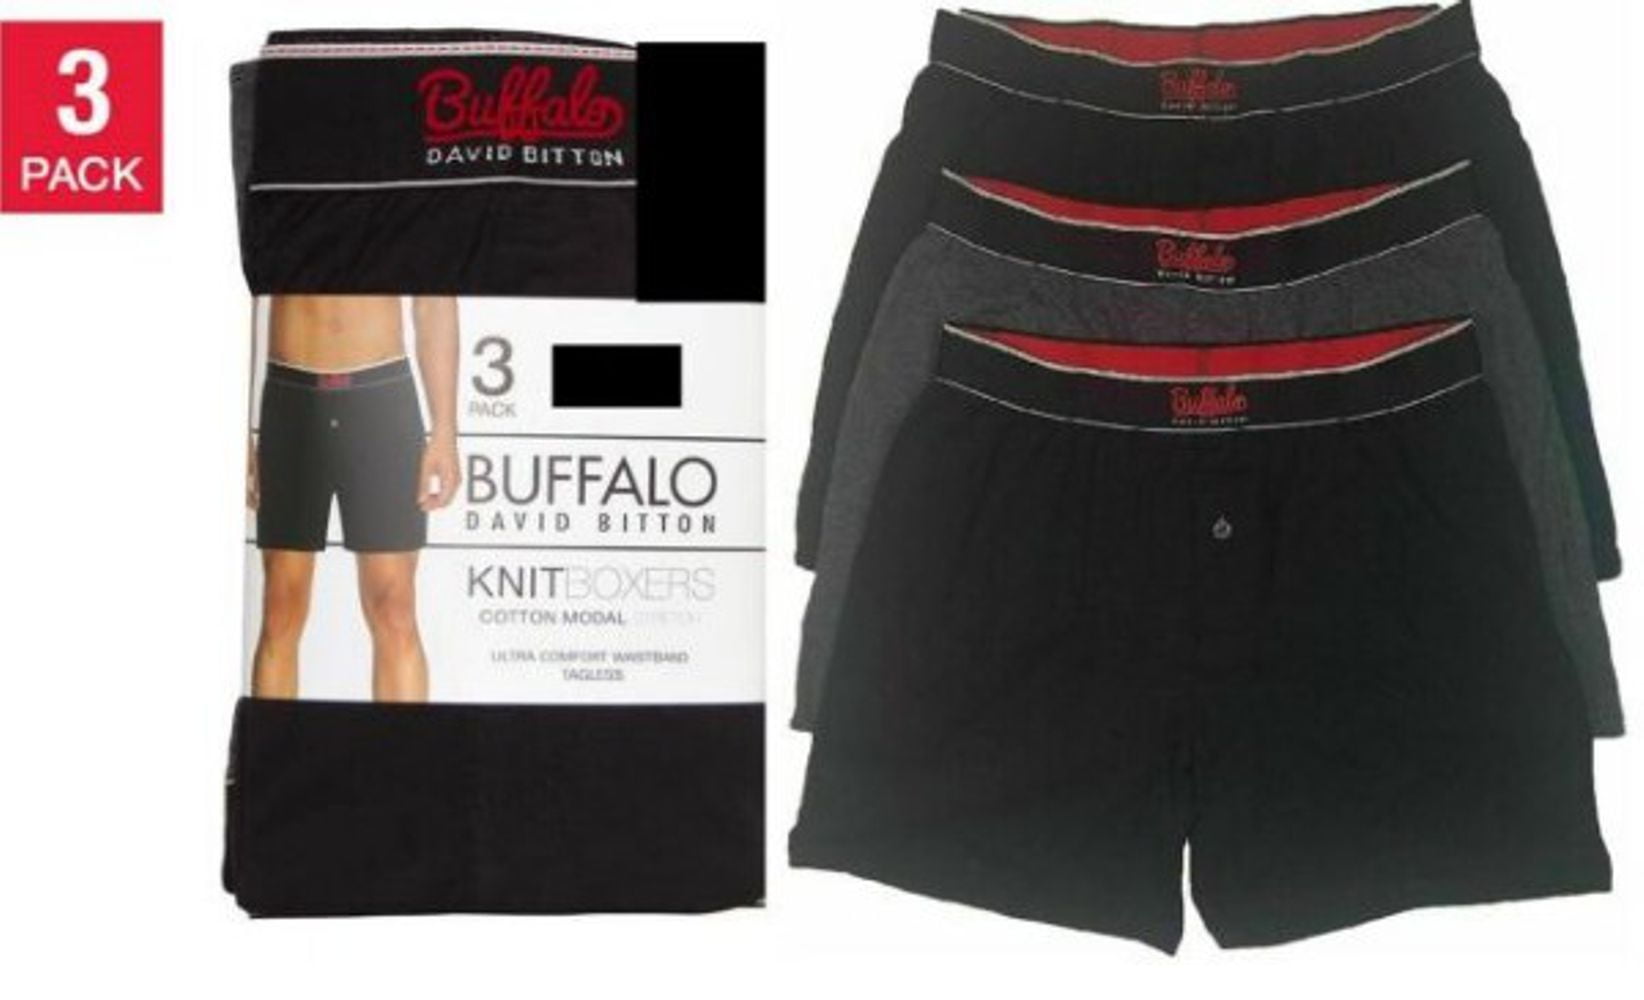 Buffalo David Bitton Mens 3 Pack Knit Boxers (Large, Black/Black/Grey) - NEW